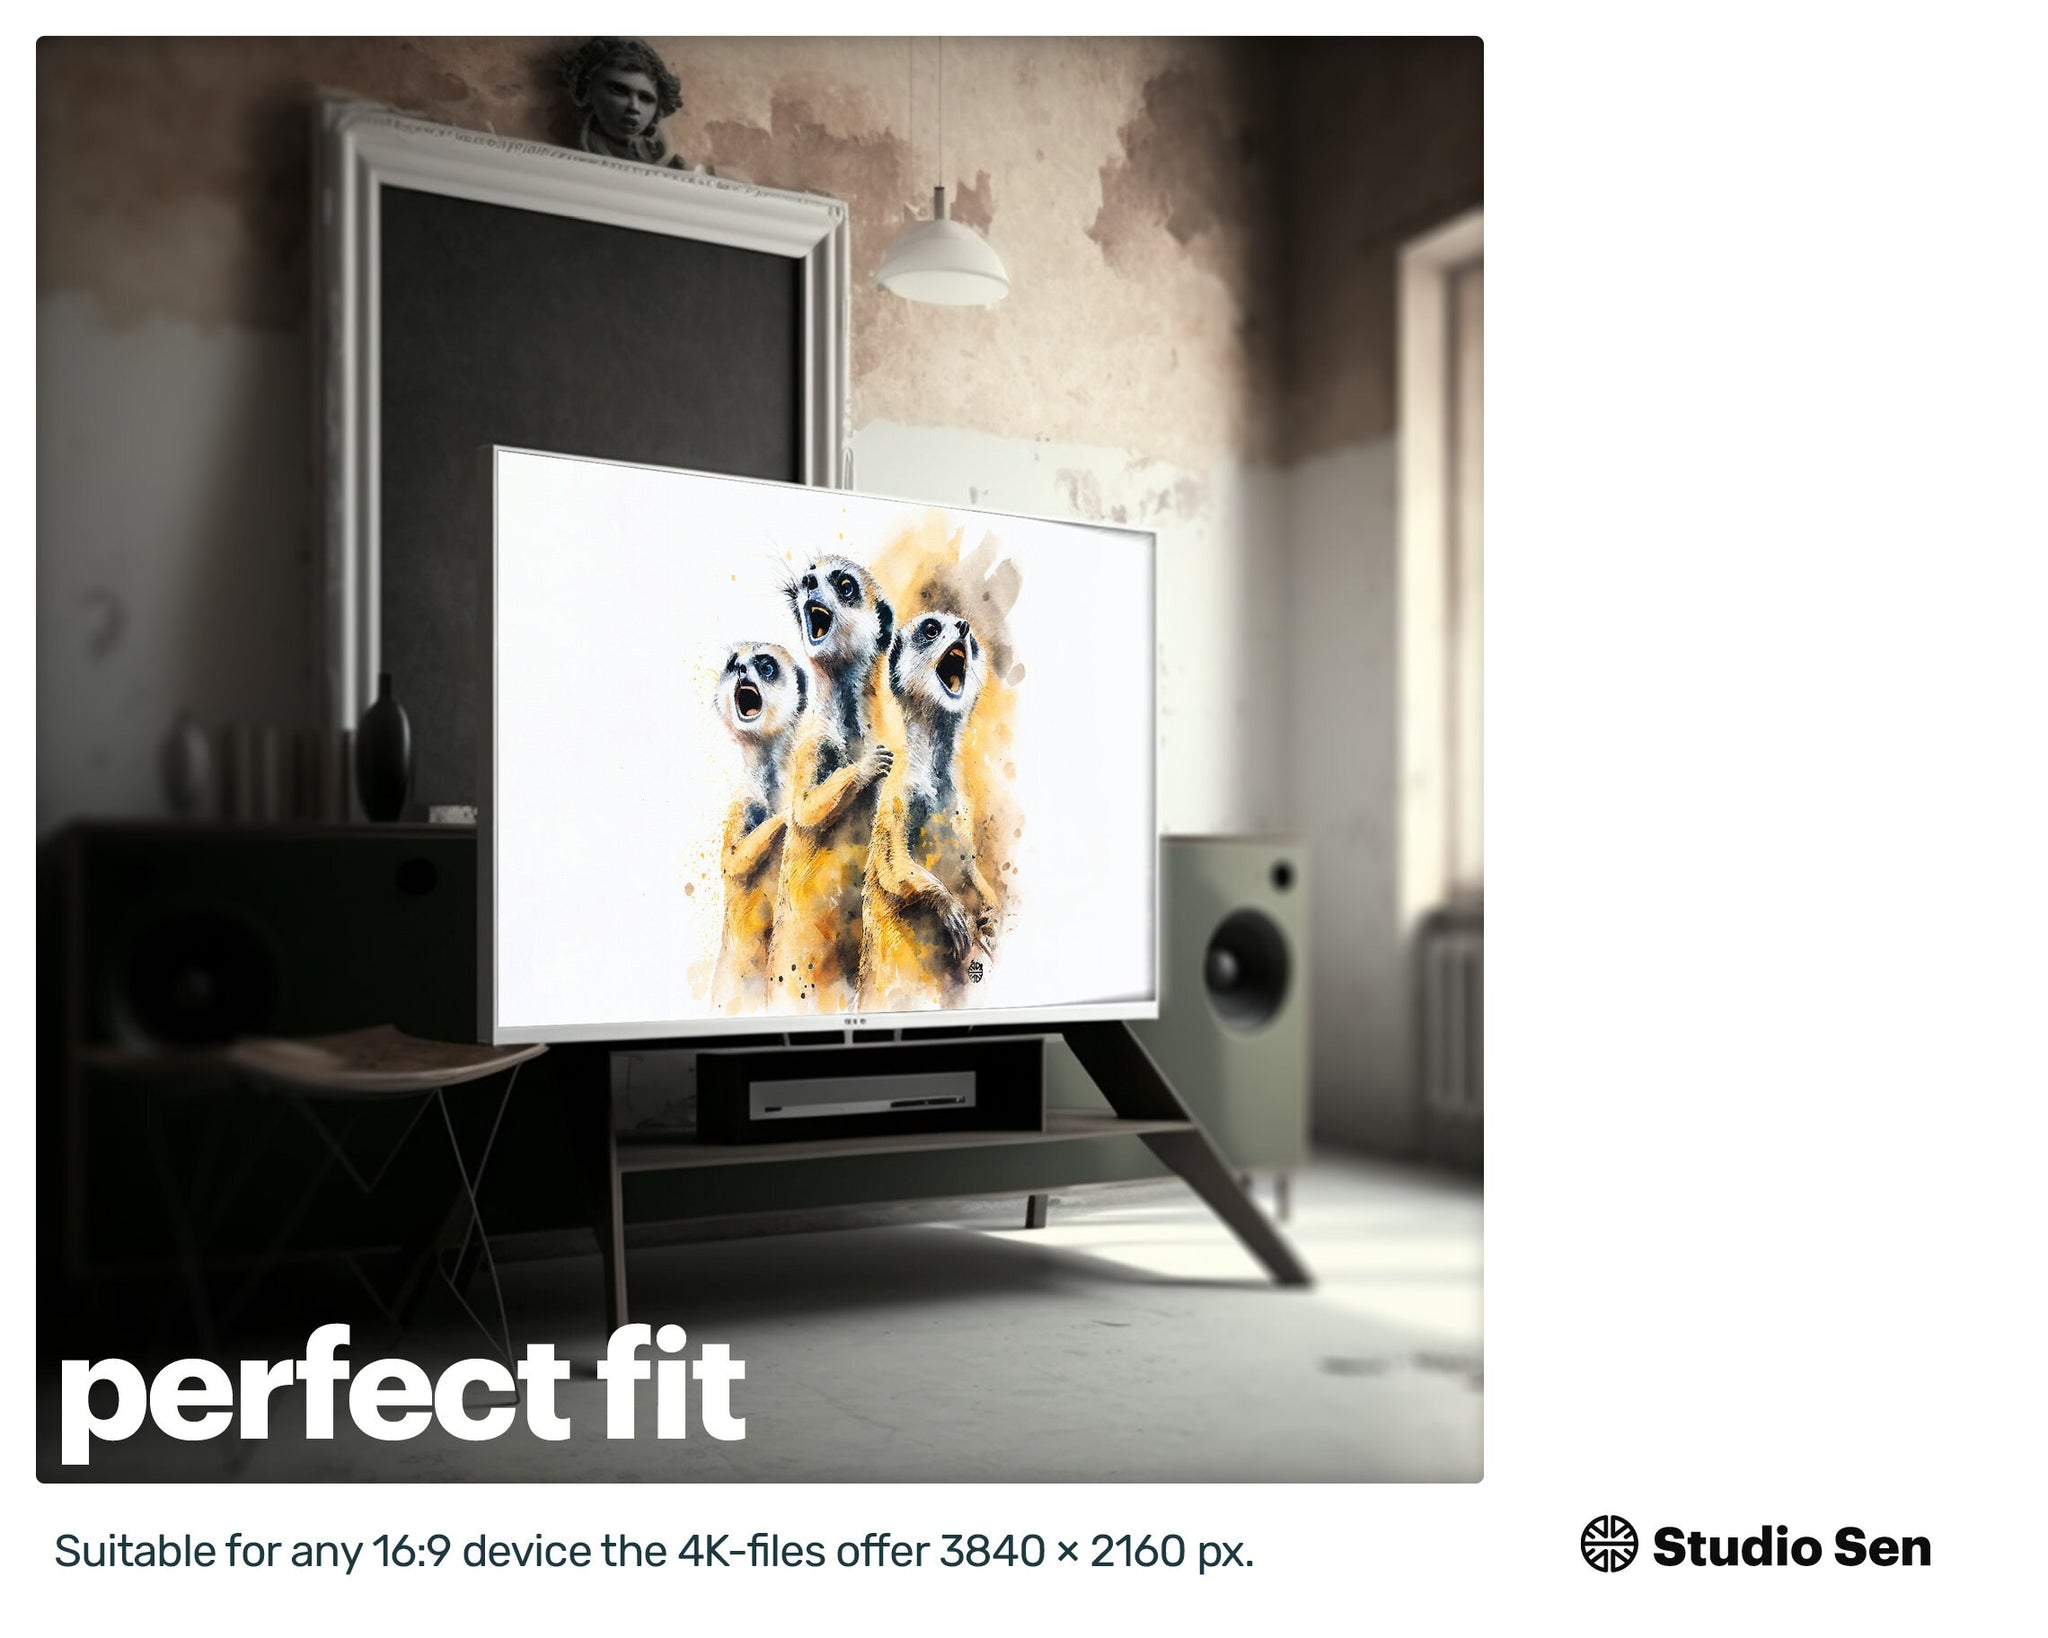 Samsung Art TV, Happy Meerkats , premium download, drops and splashes, friendly wallpaper, art for kids